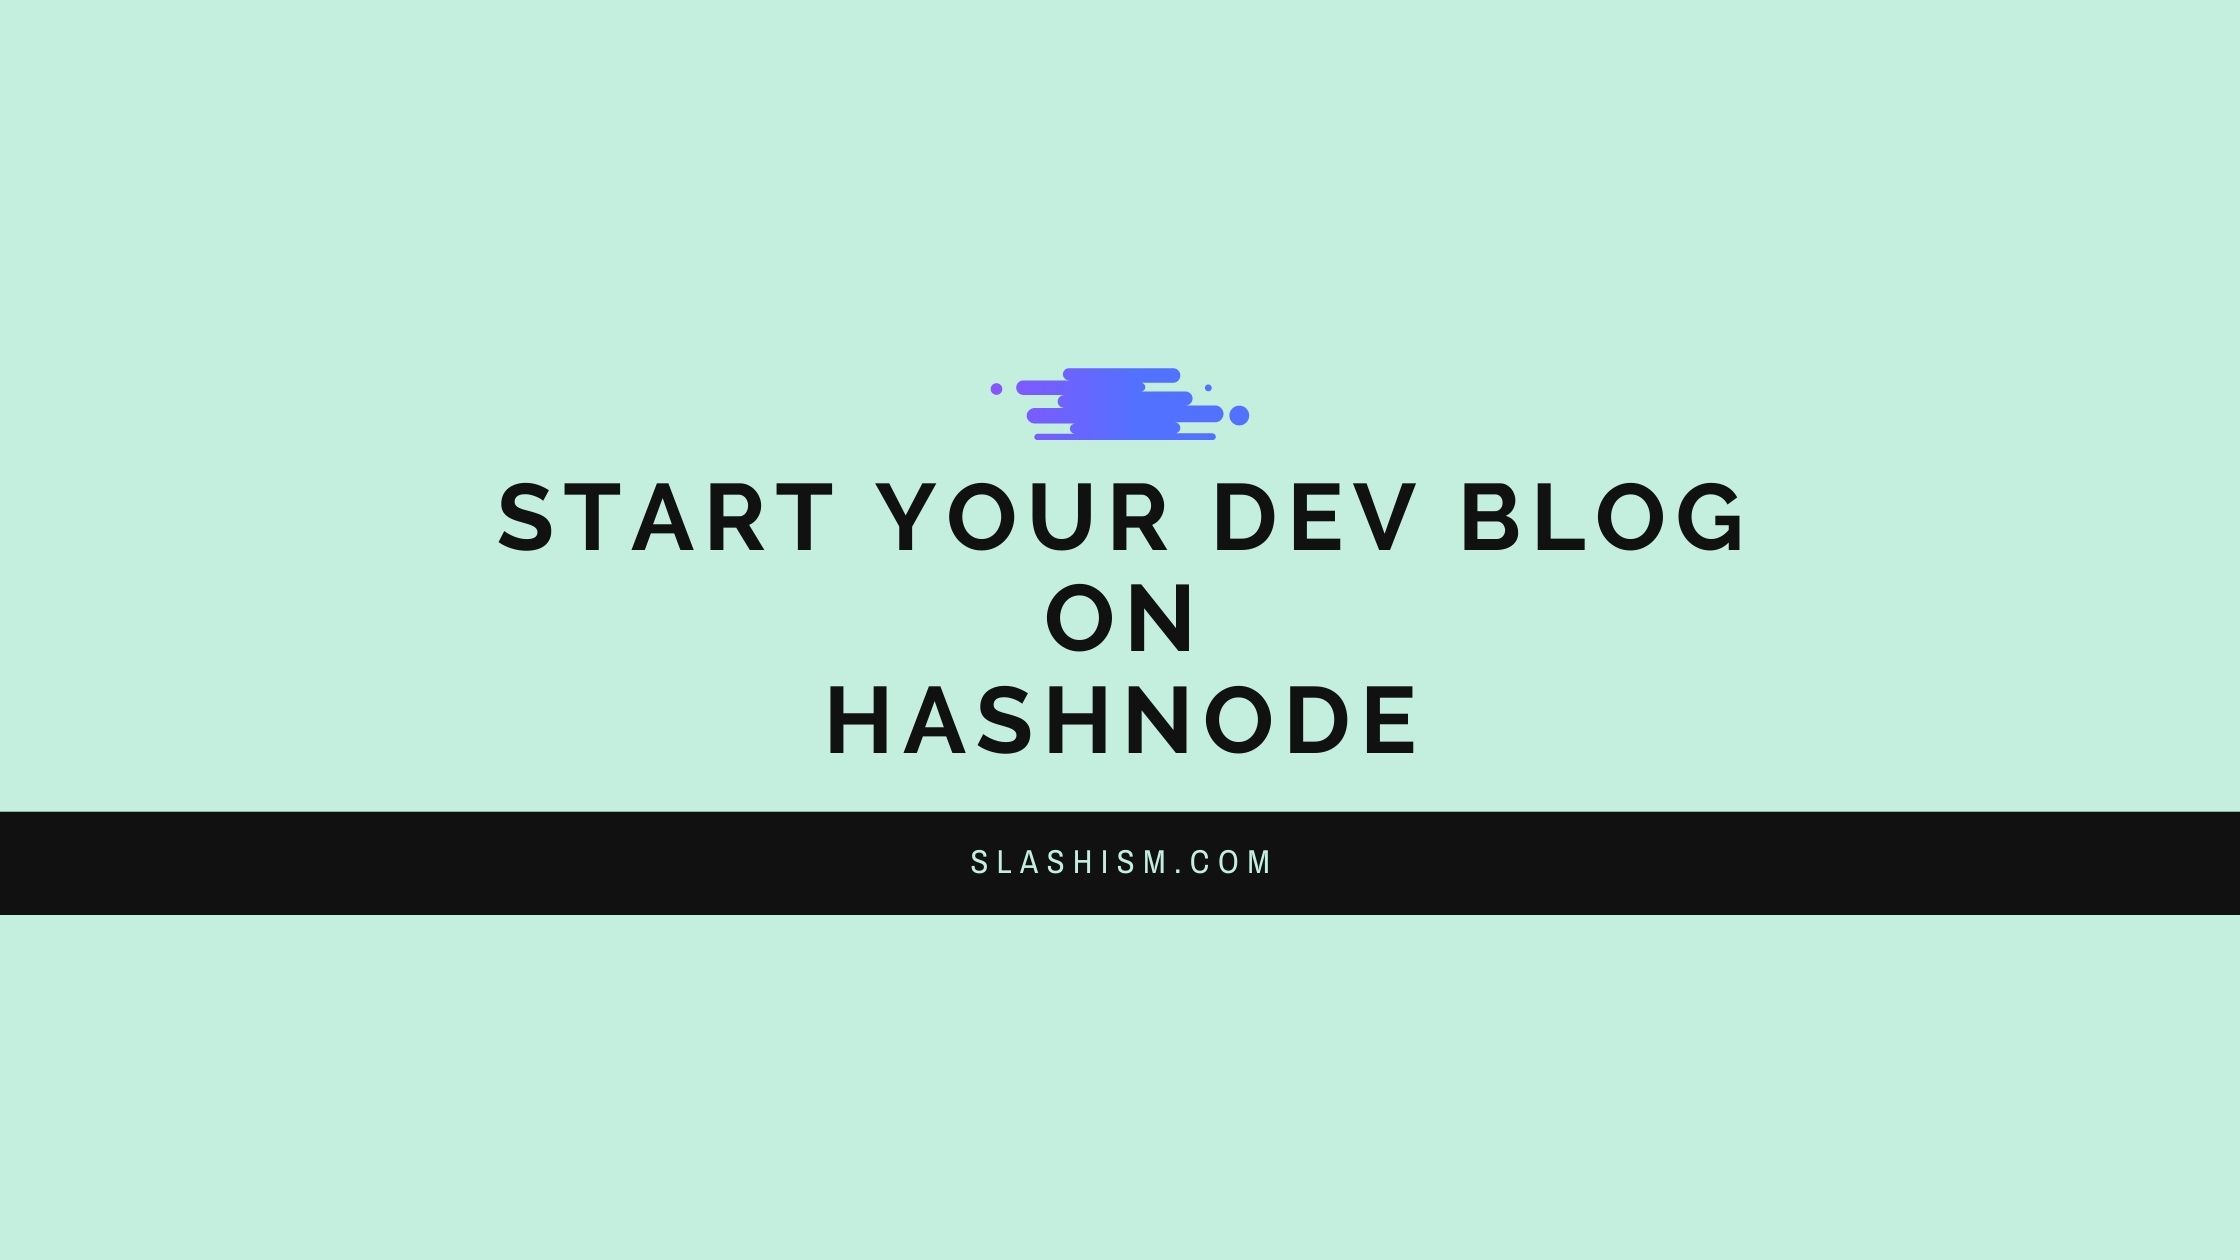 Why Should You Start Your Dev Blog On Hashnode